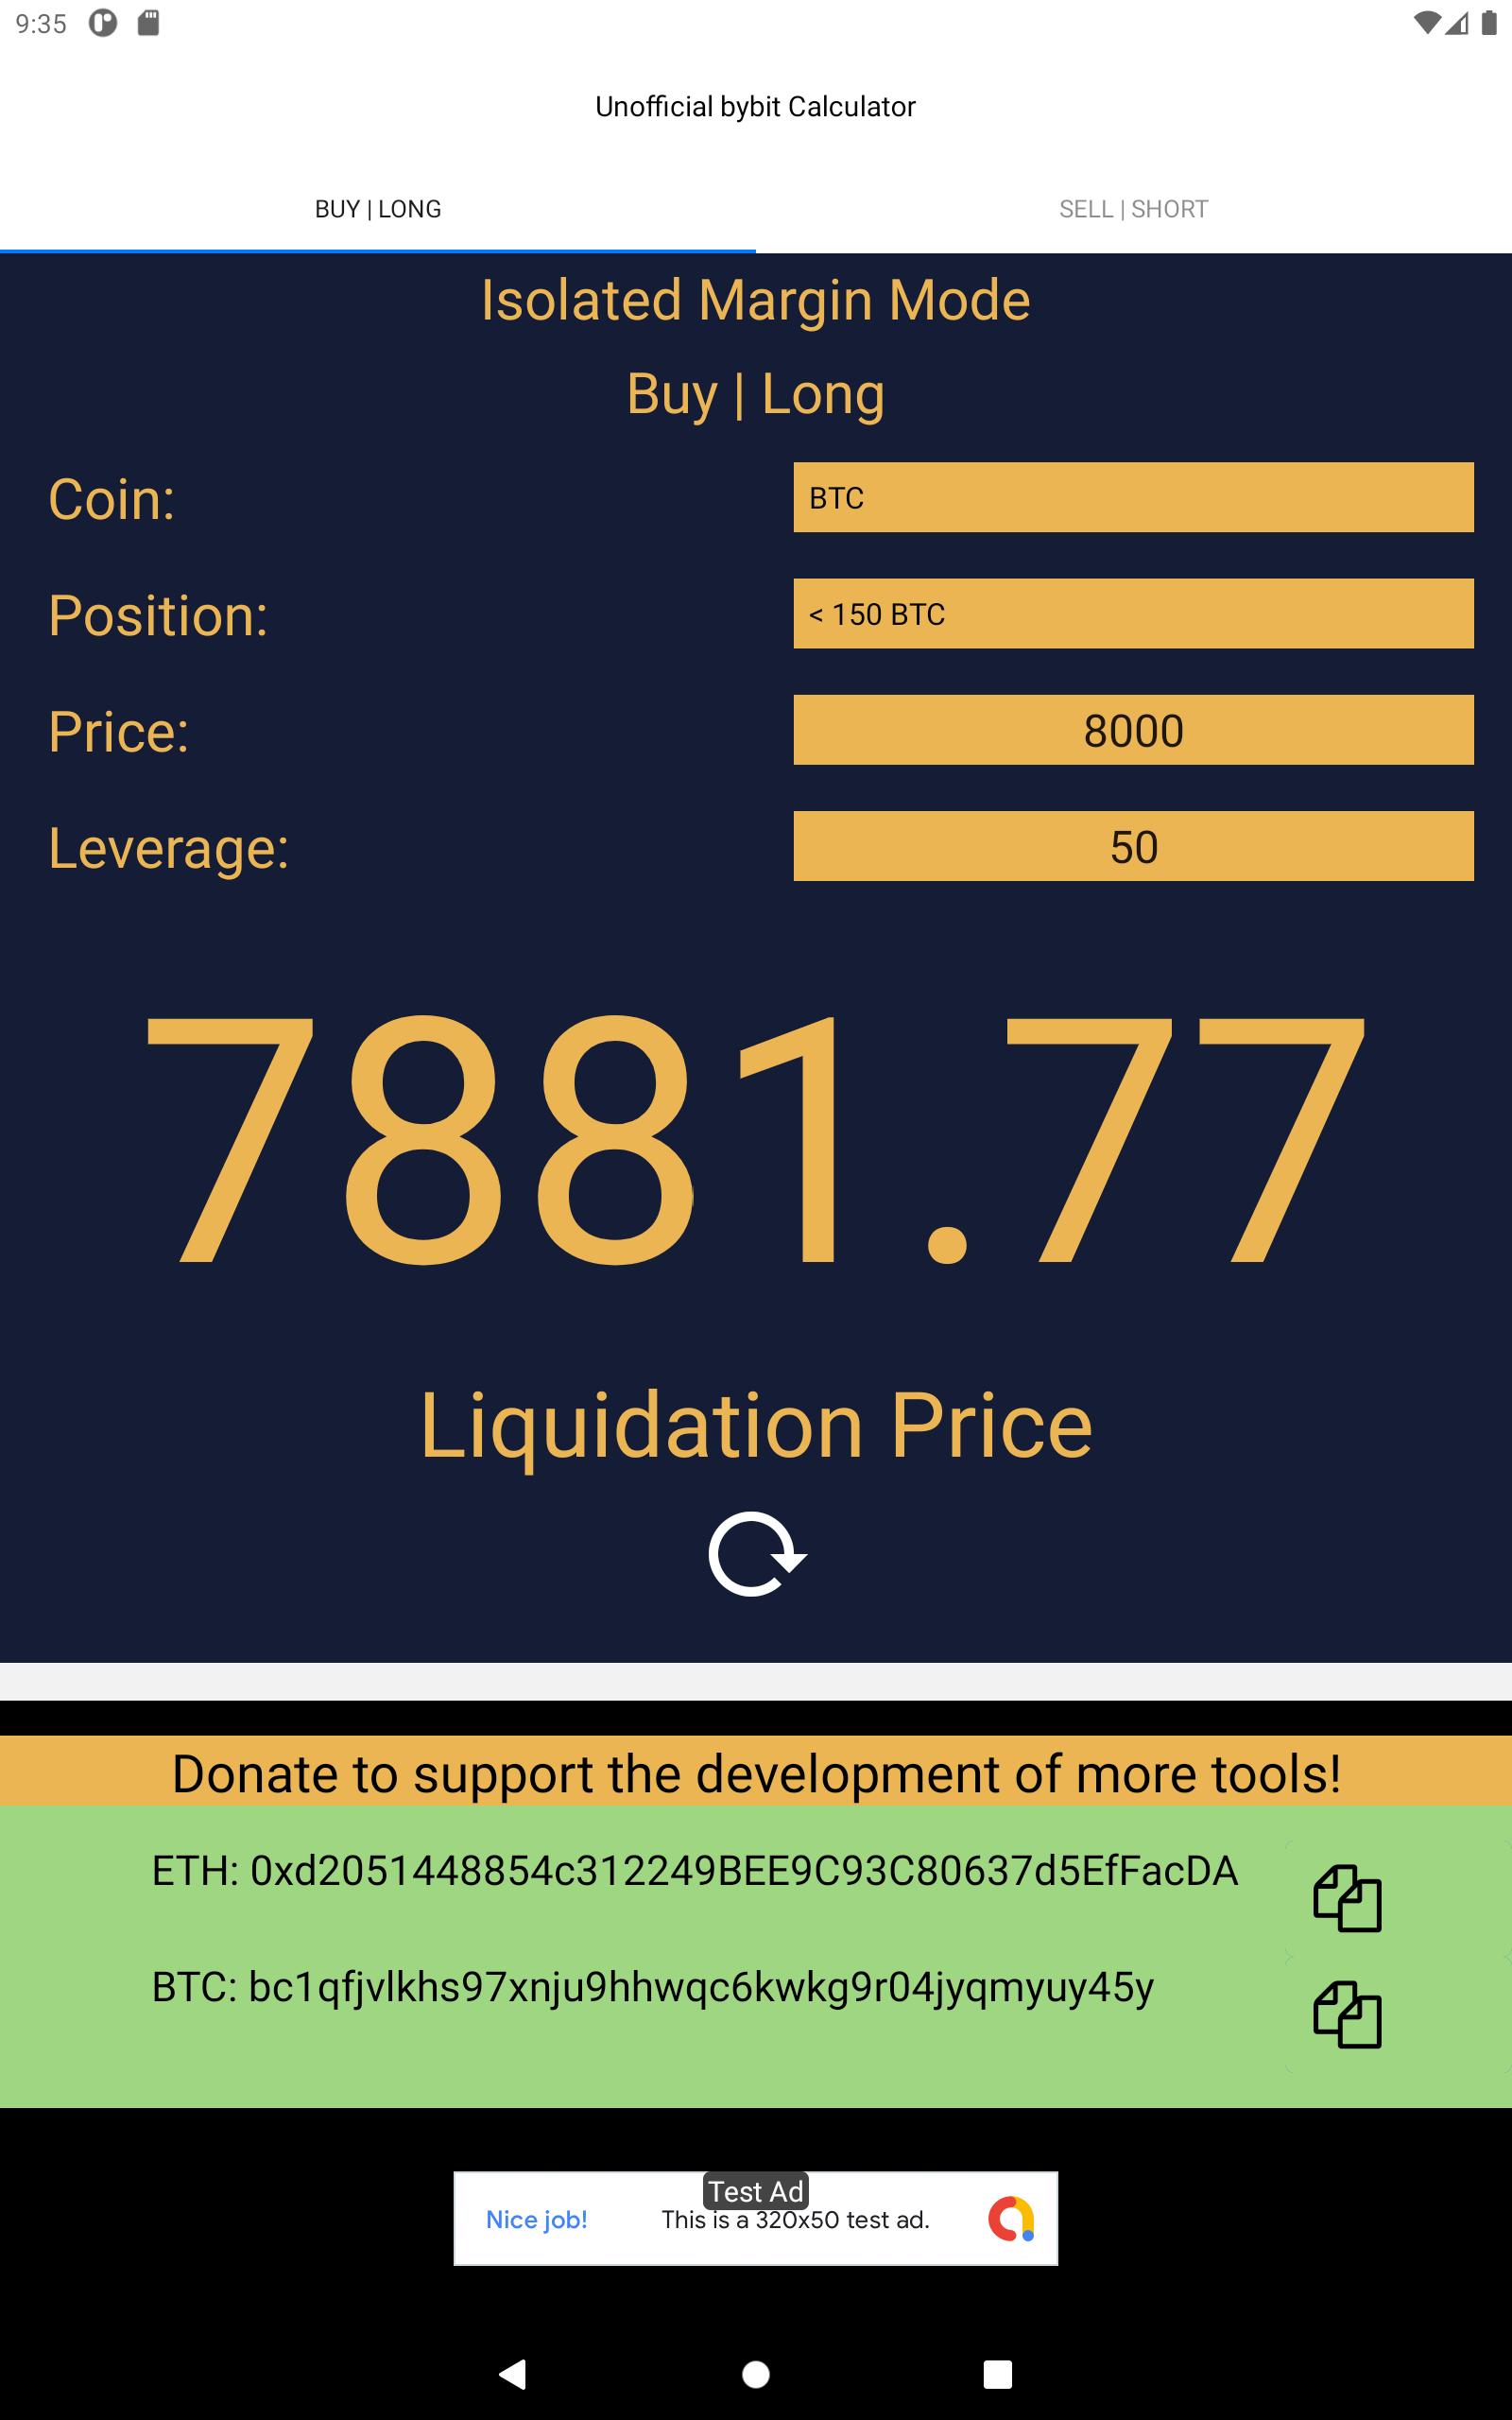 bybit Liquidation Price Calculator, Unofficial安卓版应用APK下载